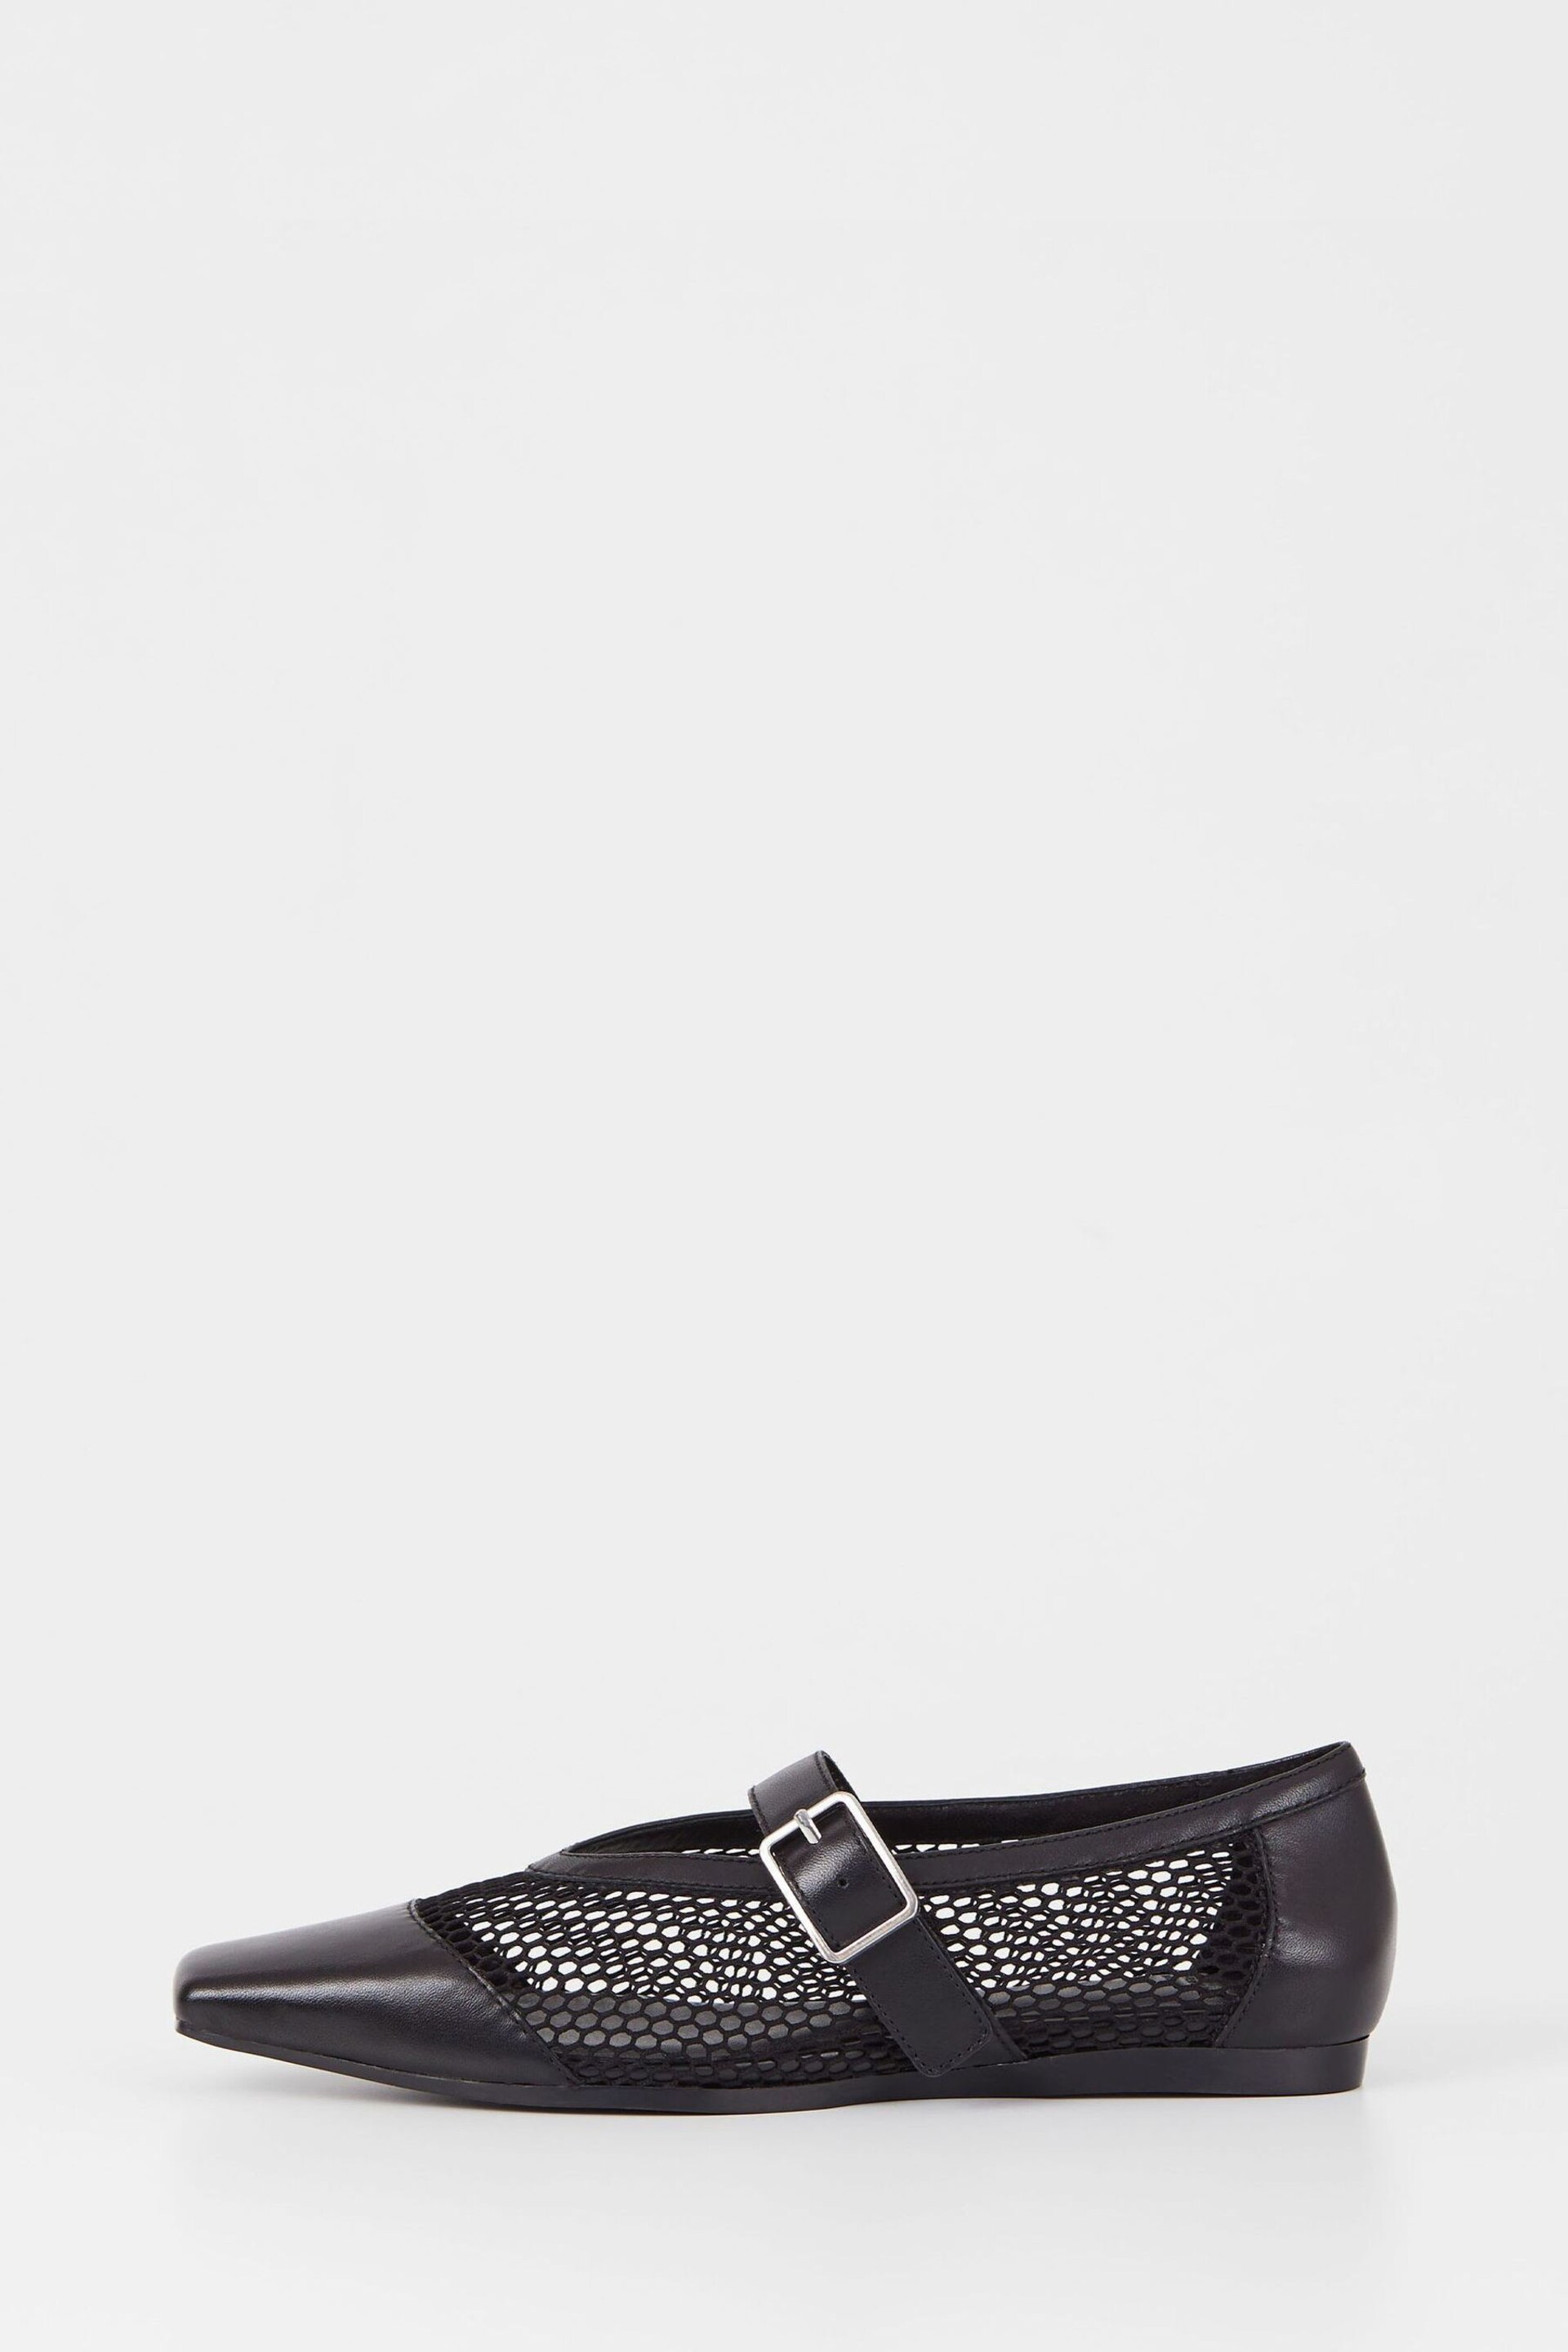 Vagabond Shoemakers Wioletta Leather/Mesh Mary Jane White Shoes - Image 1 of 3